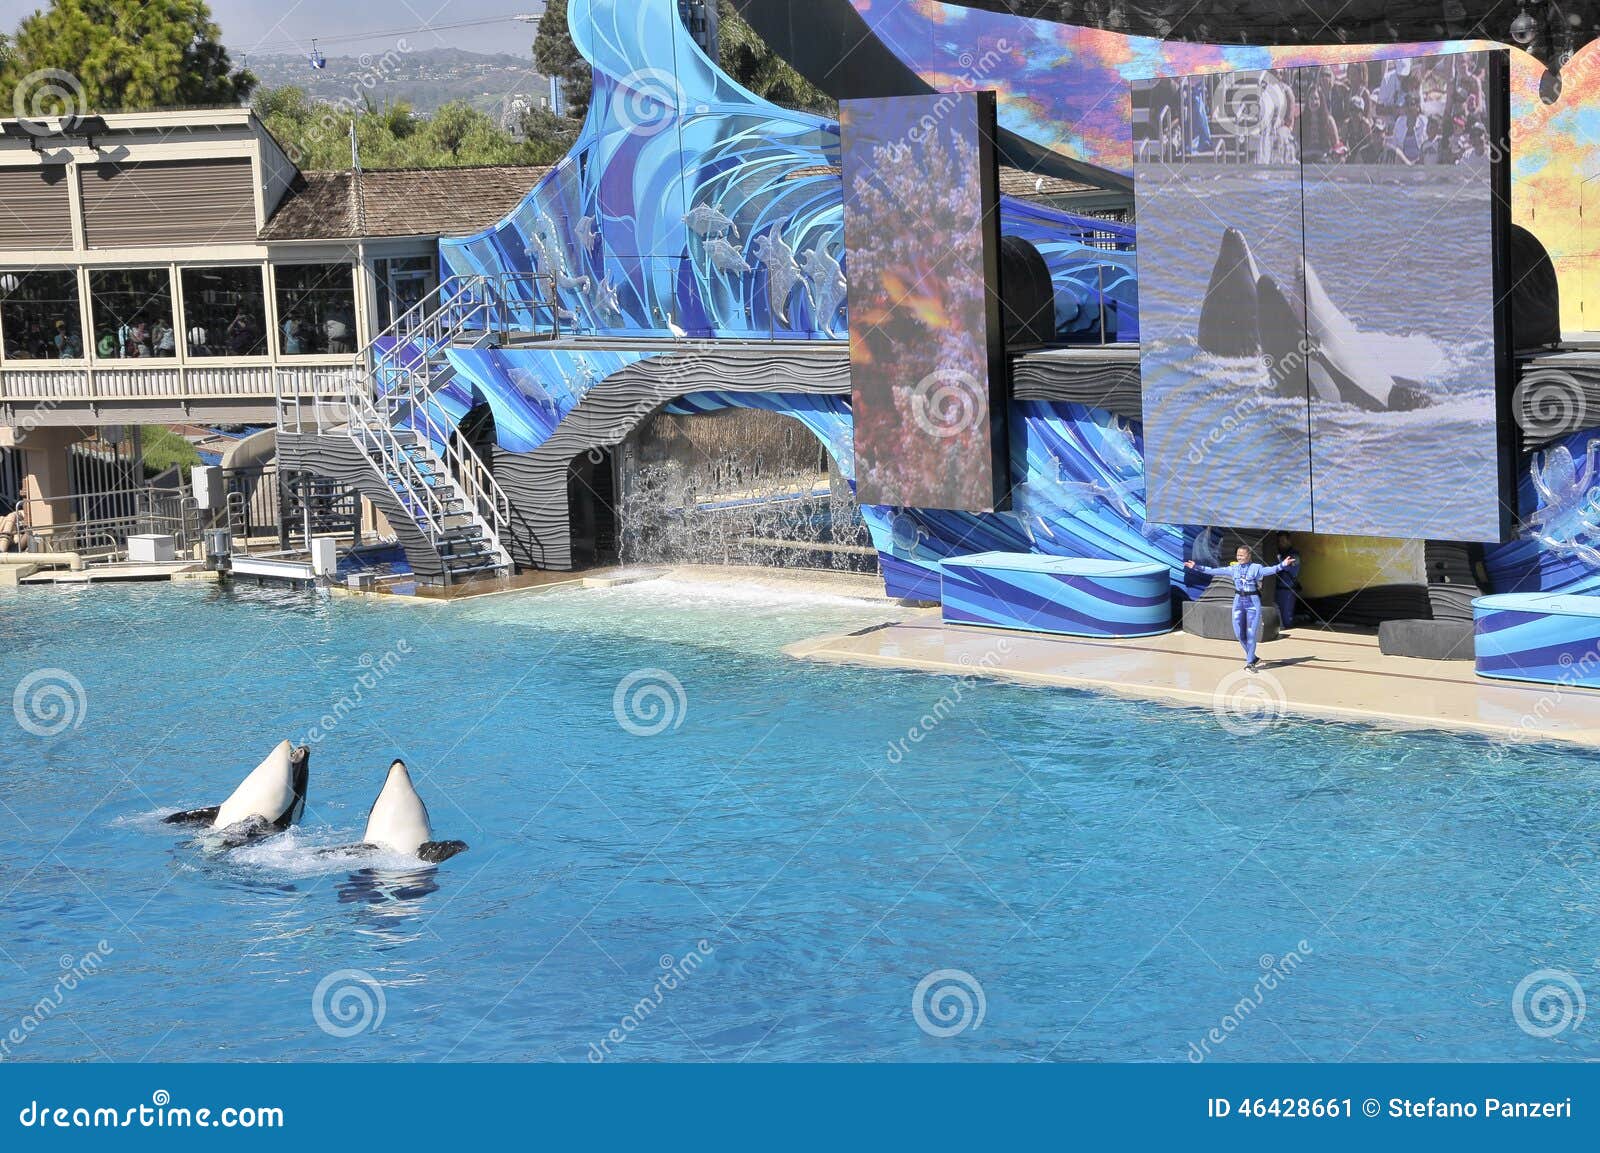 Show at Seaworld, San Diego Editorial Photo - Image of california, kids ...